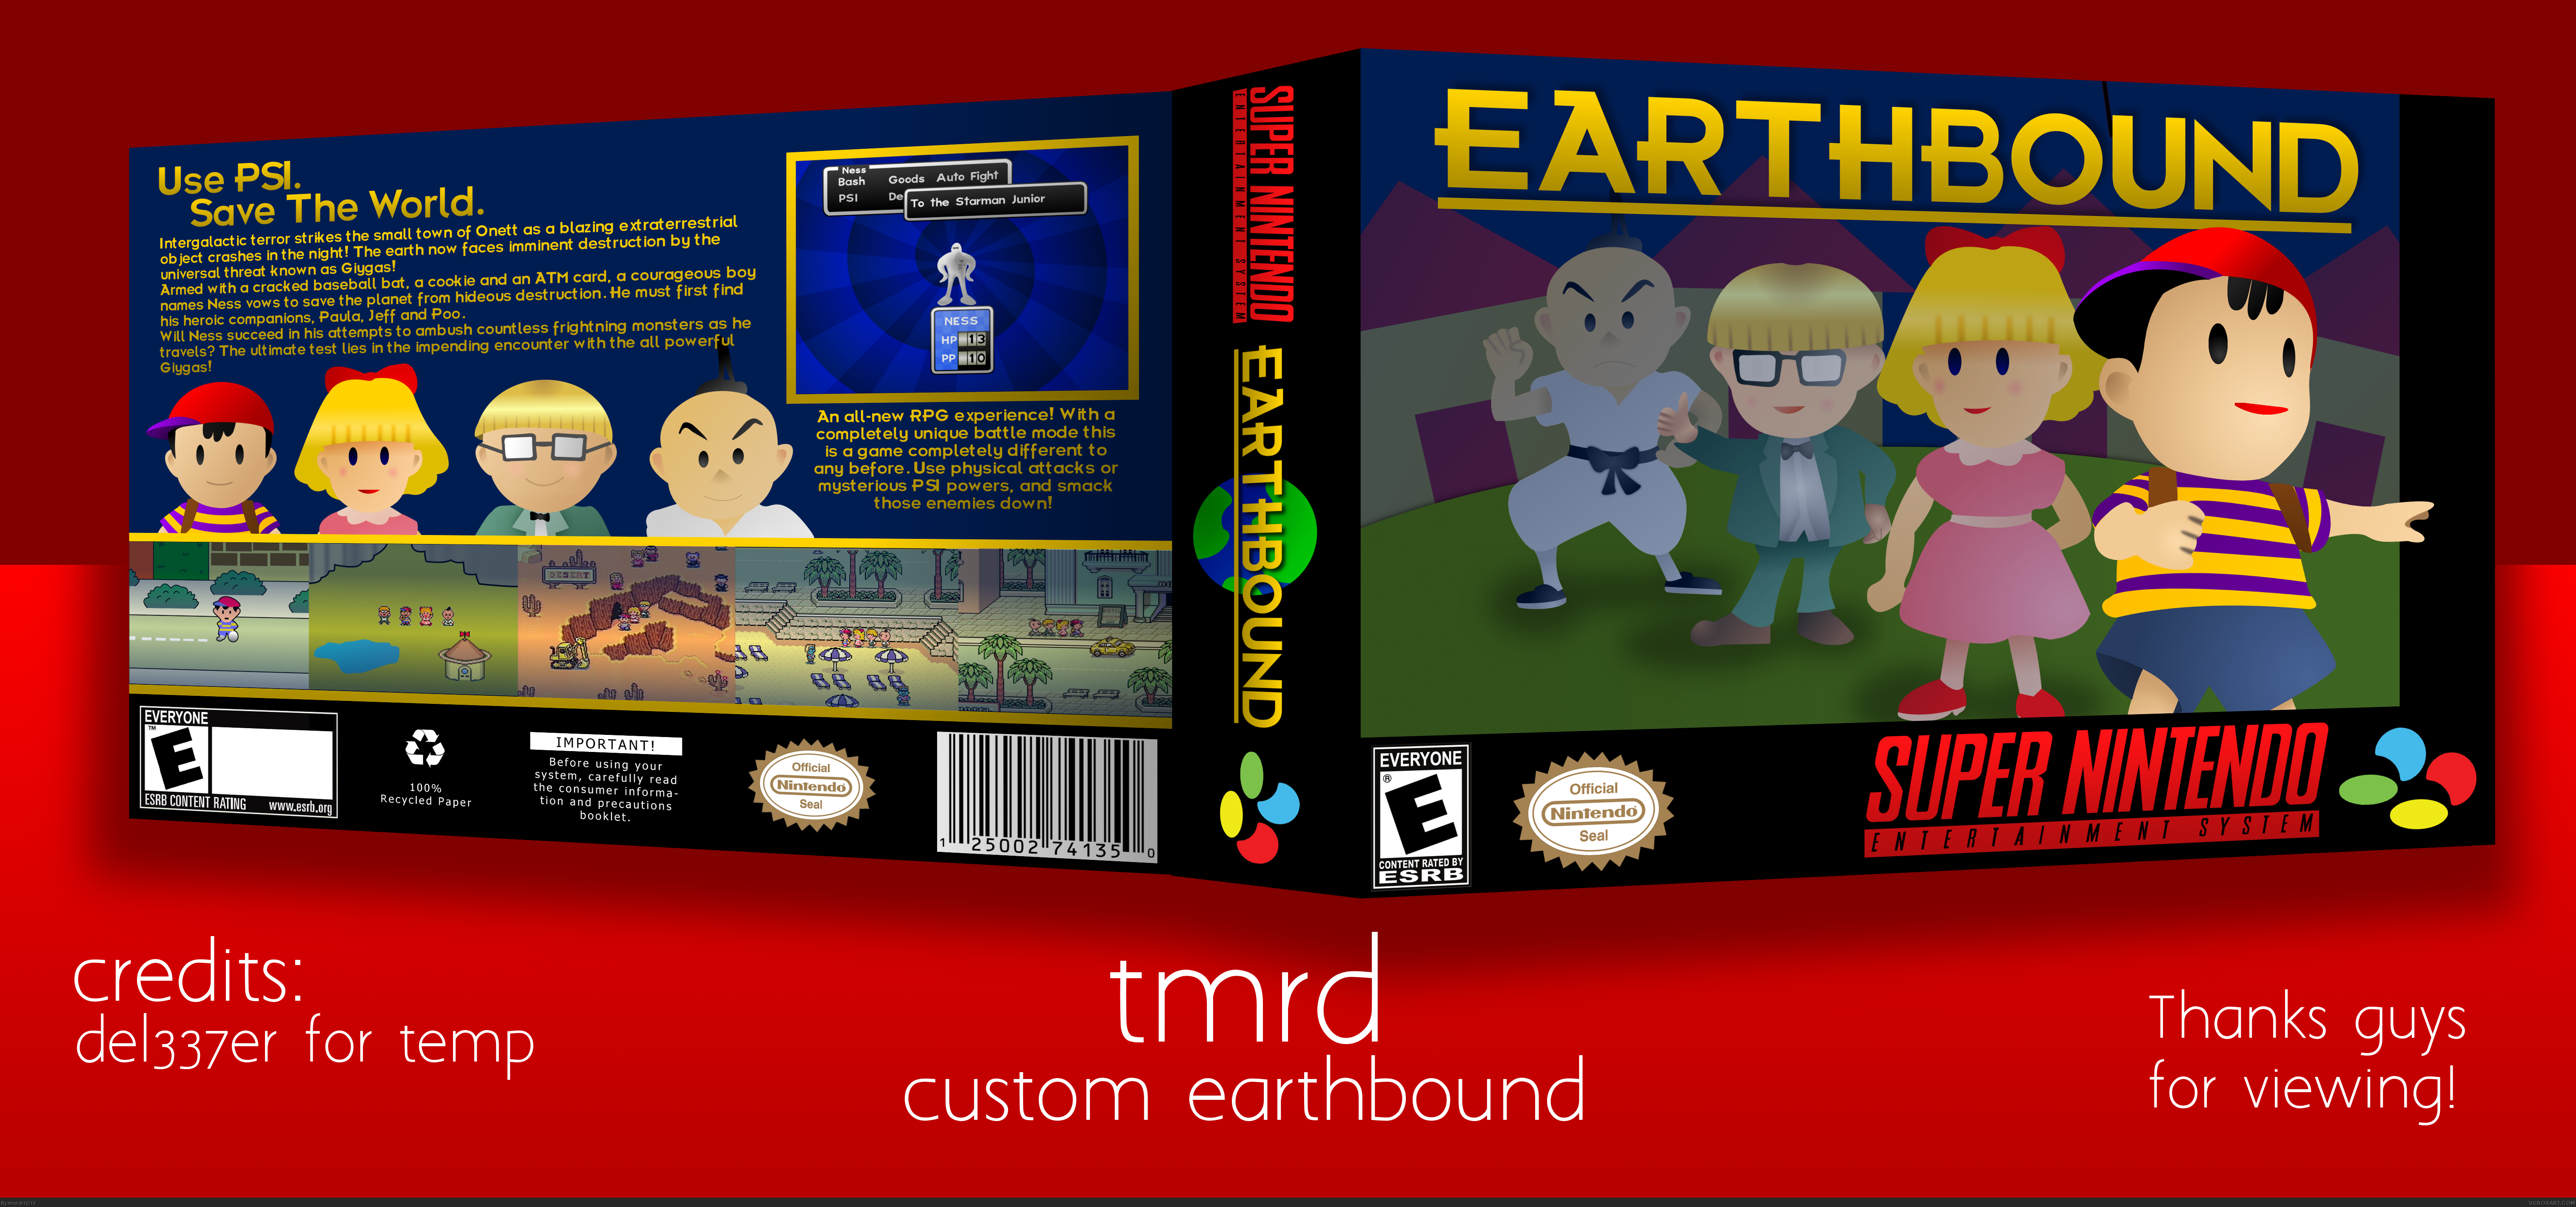 Earthbound игра. Earthbound Snes Rus. Earthbound (игра) обложка. Earthbound 2 обложка.